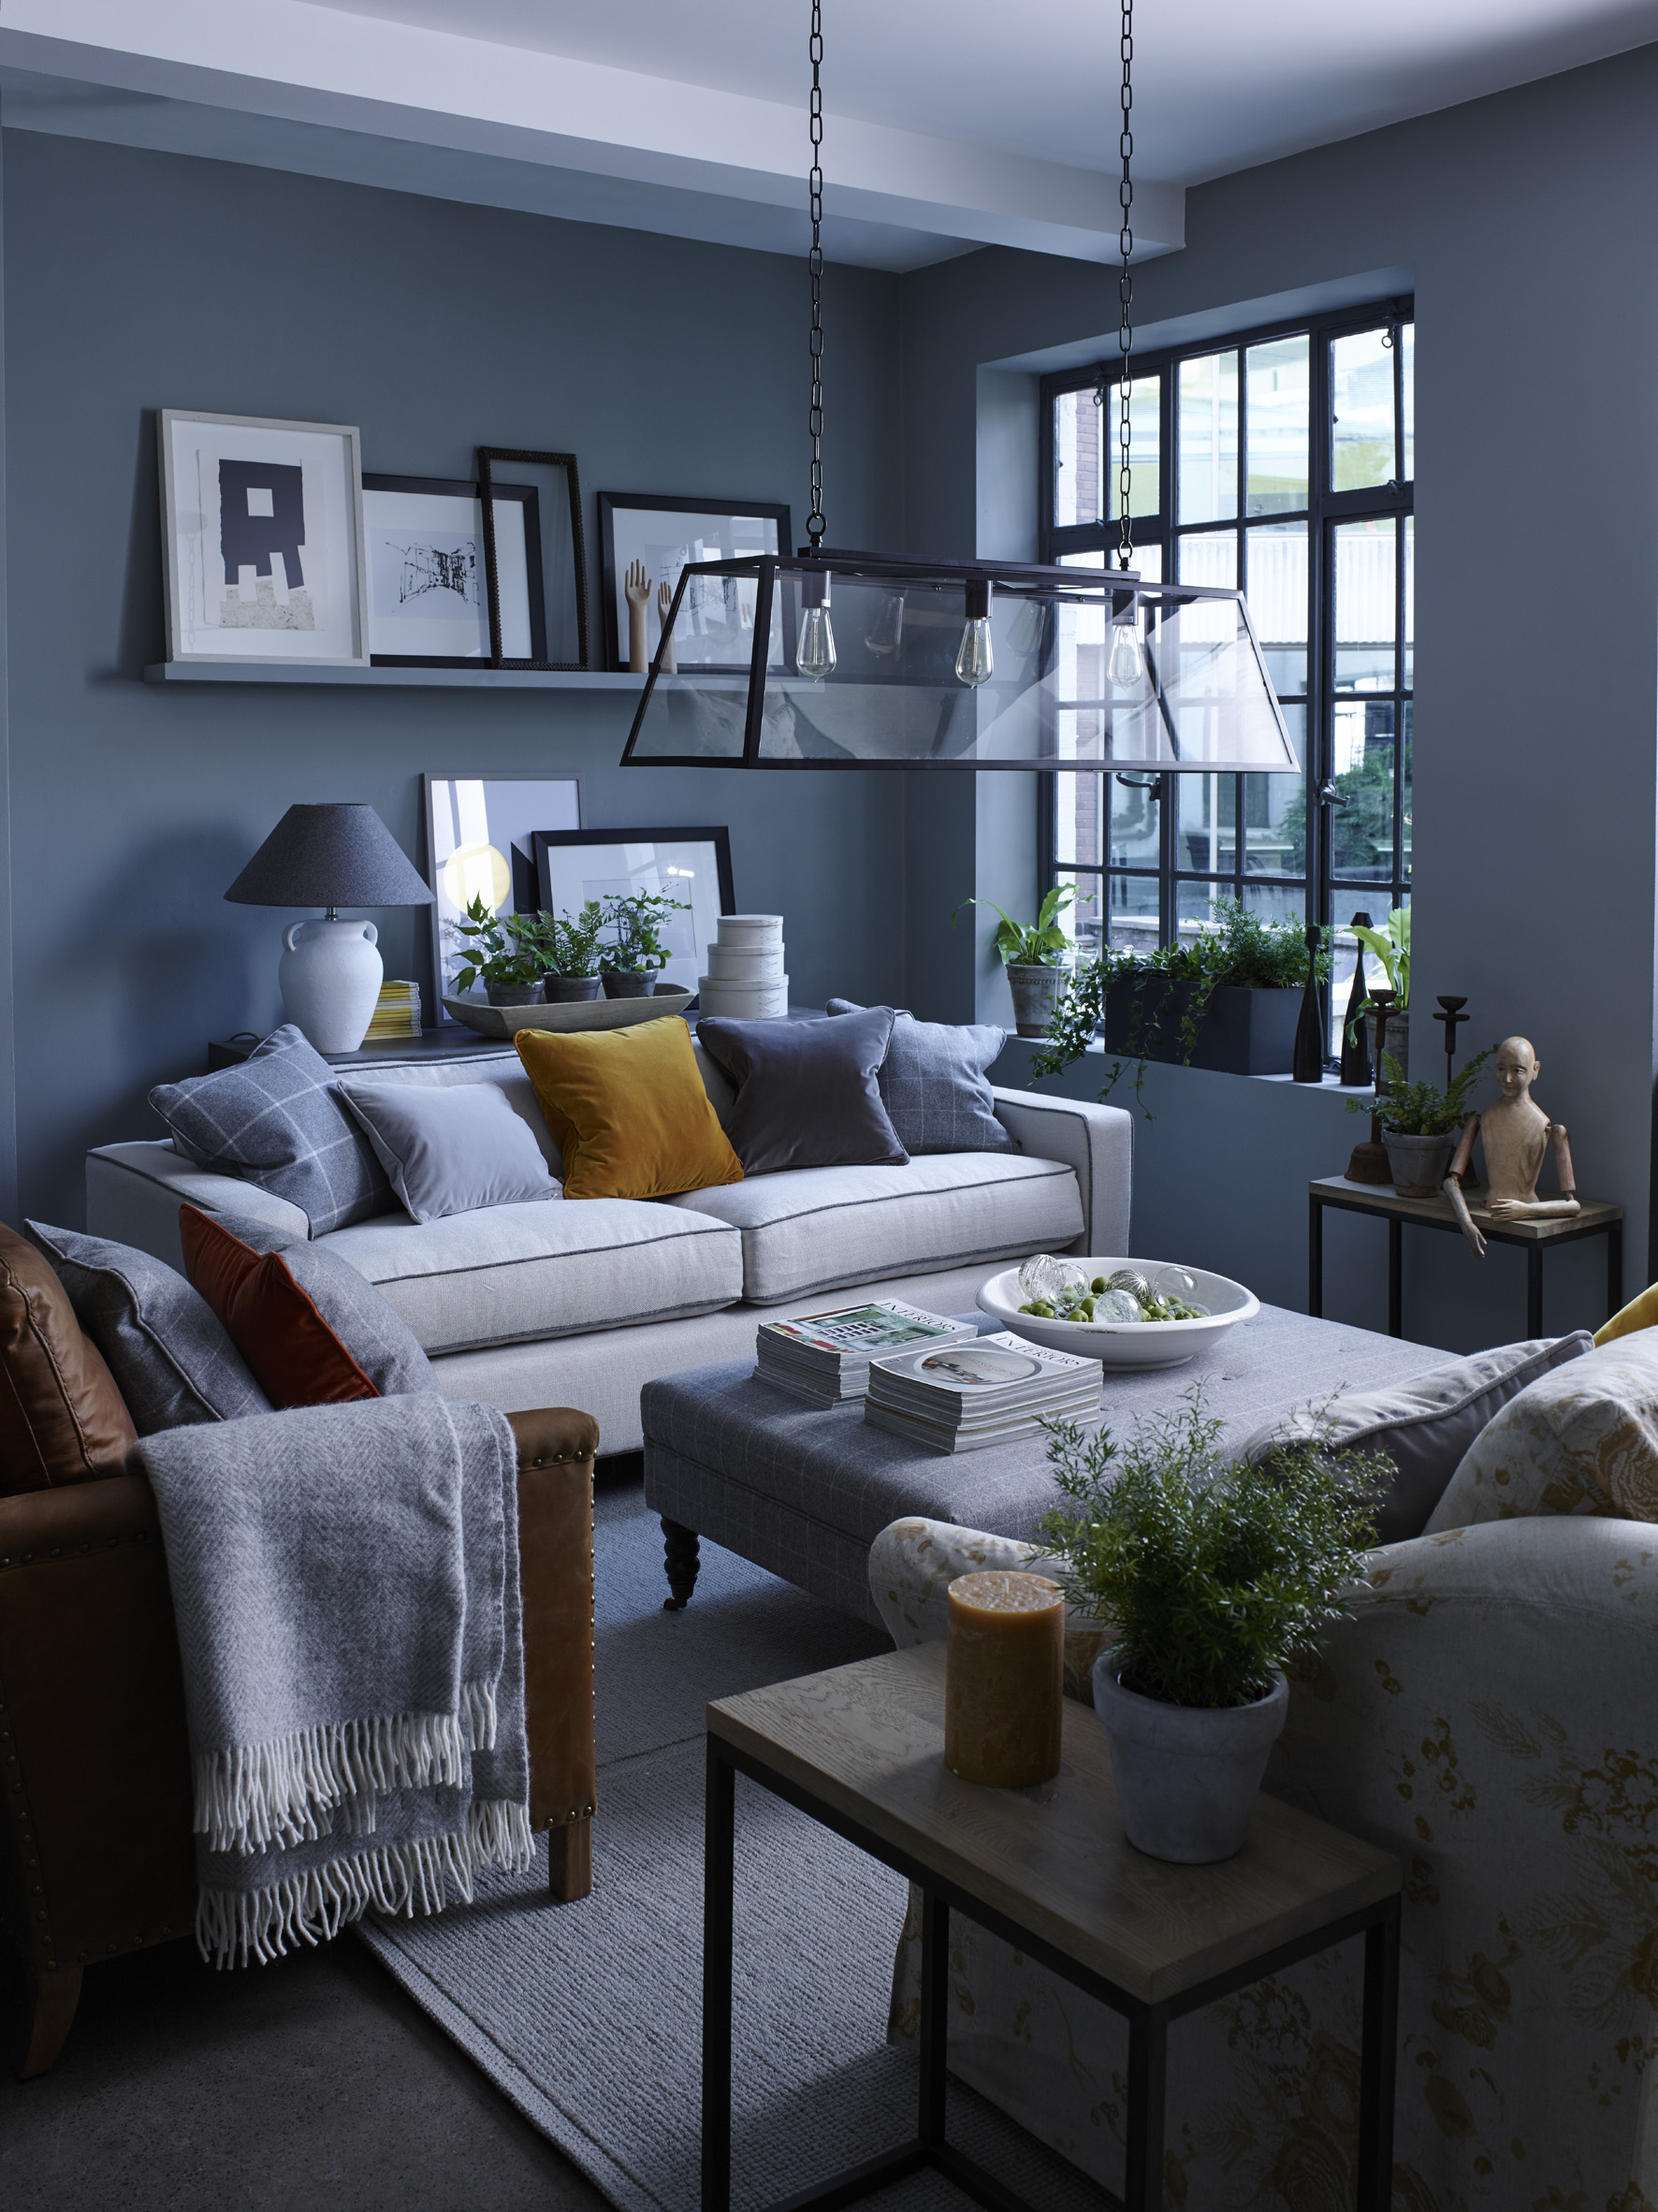 14+ Modern Living Room Ideas Grey And White - TUMBAS HOME DECOR